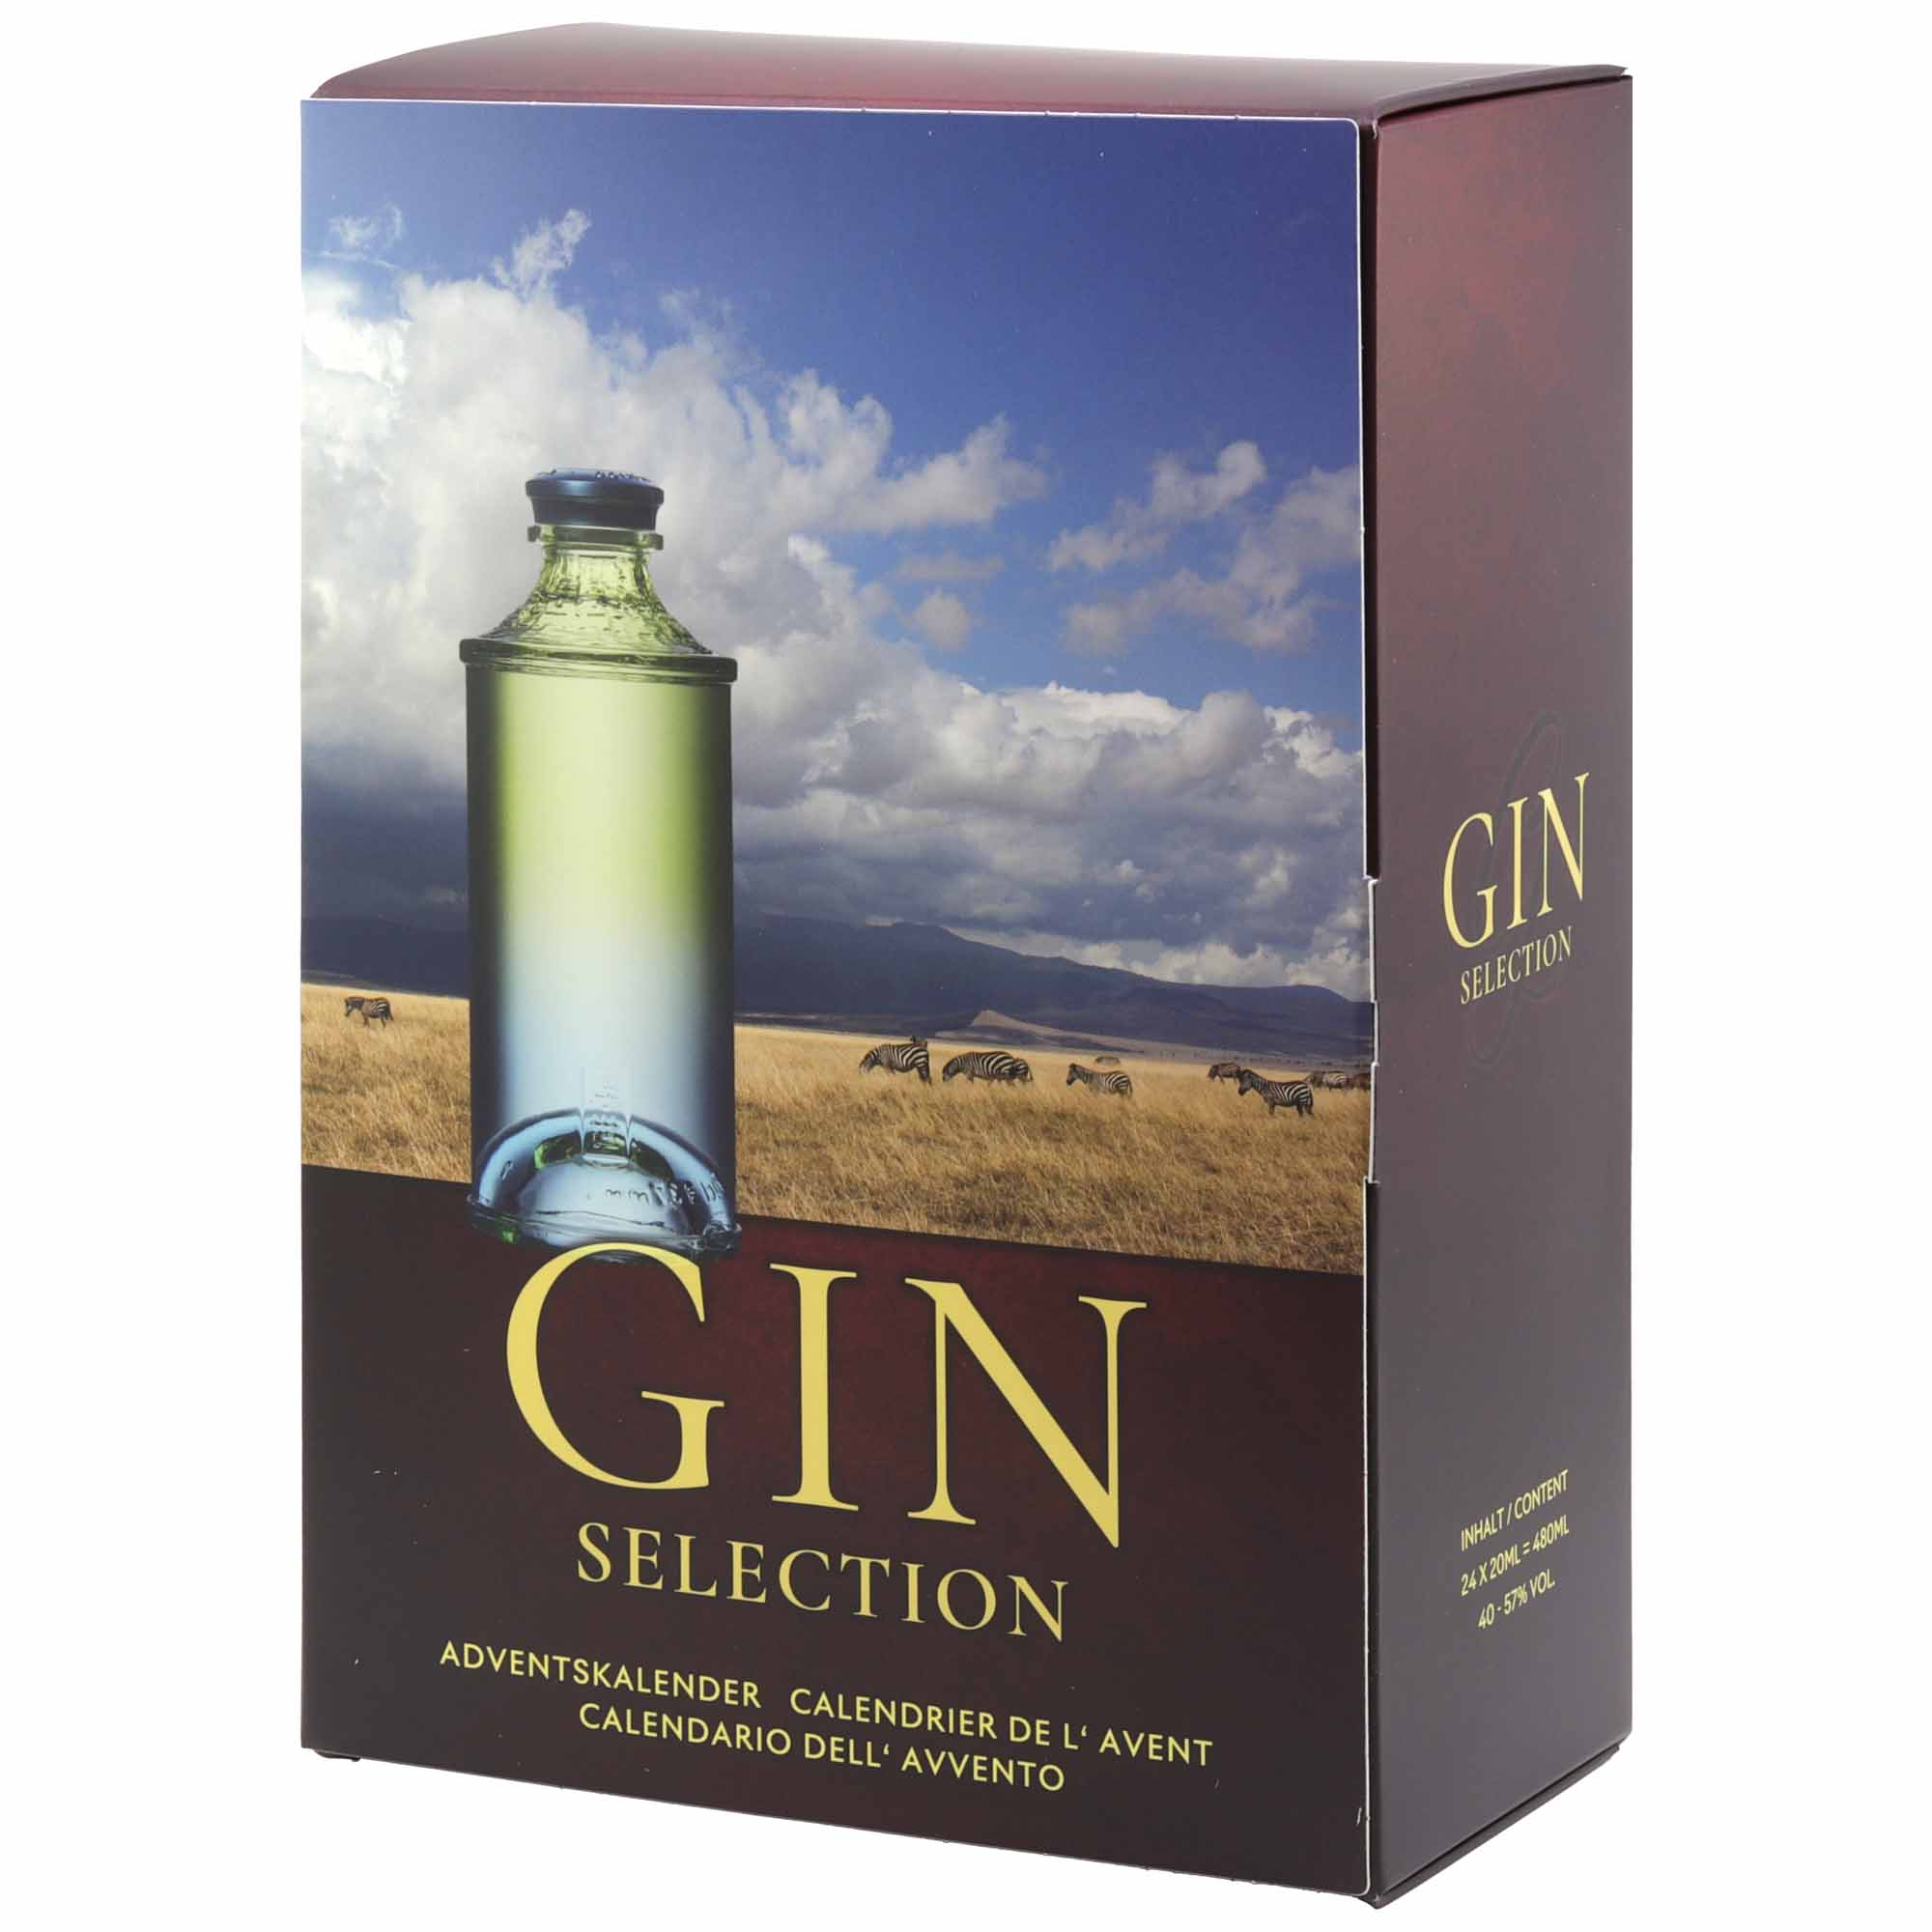 Gin Adventskalender Special Edition
